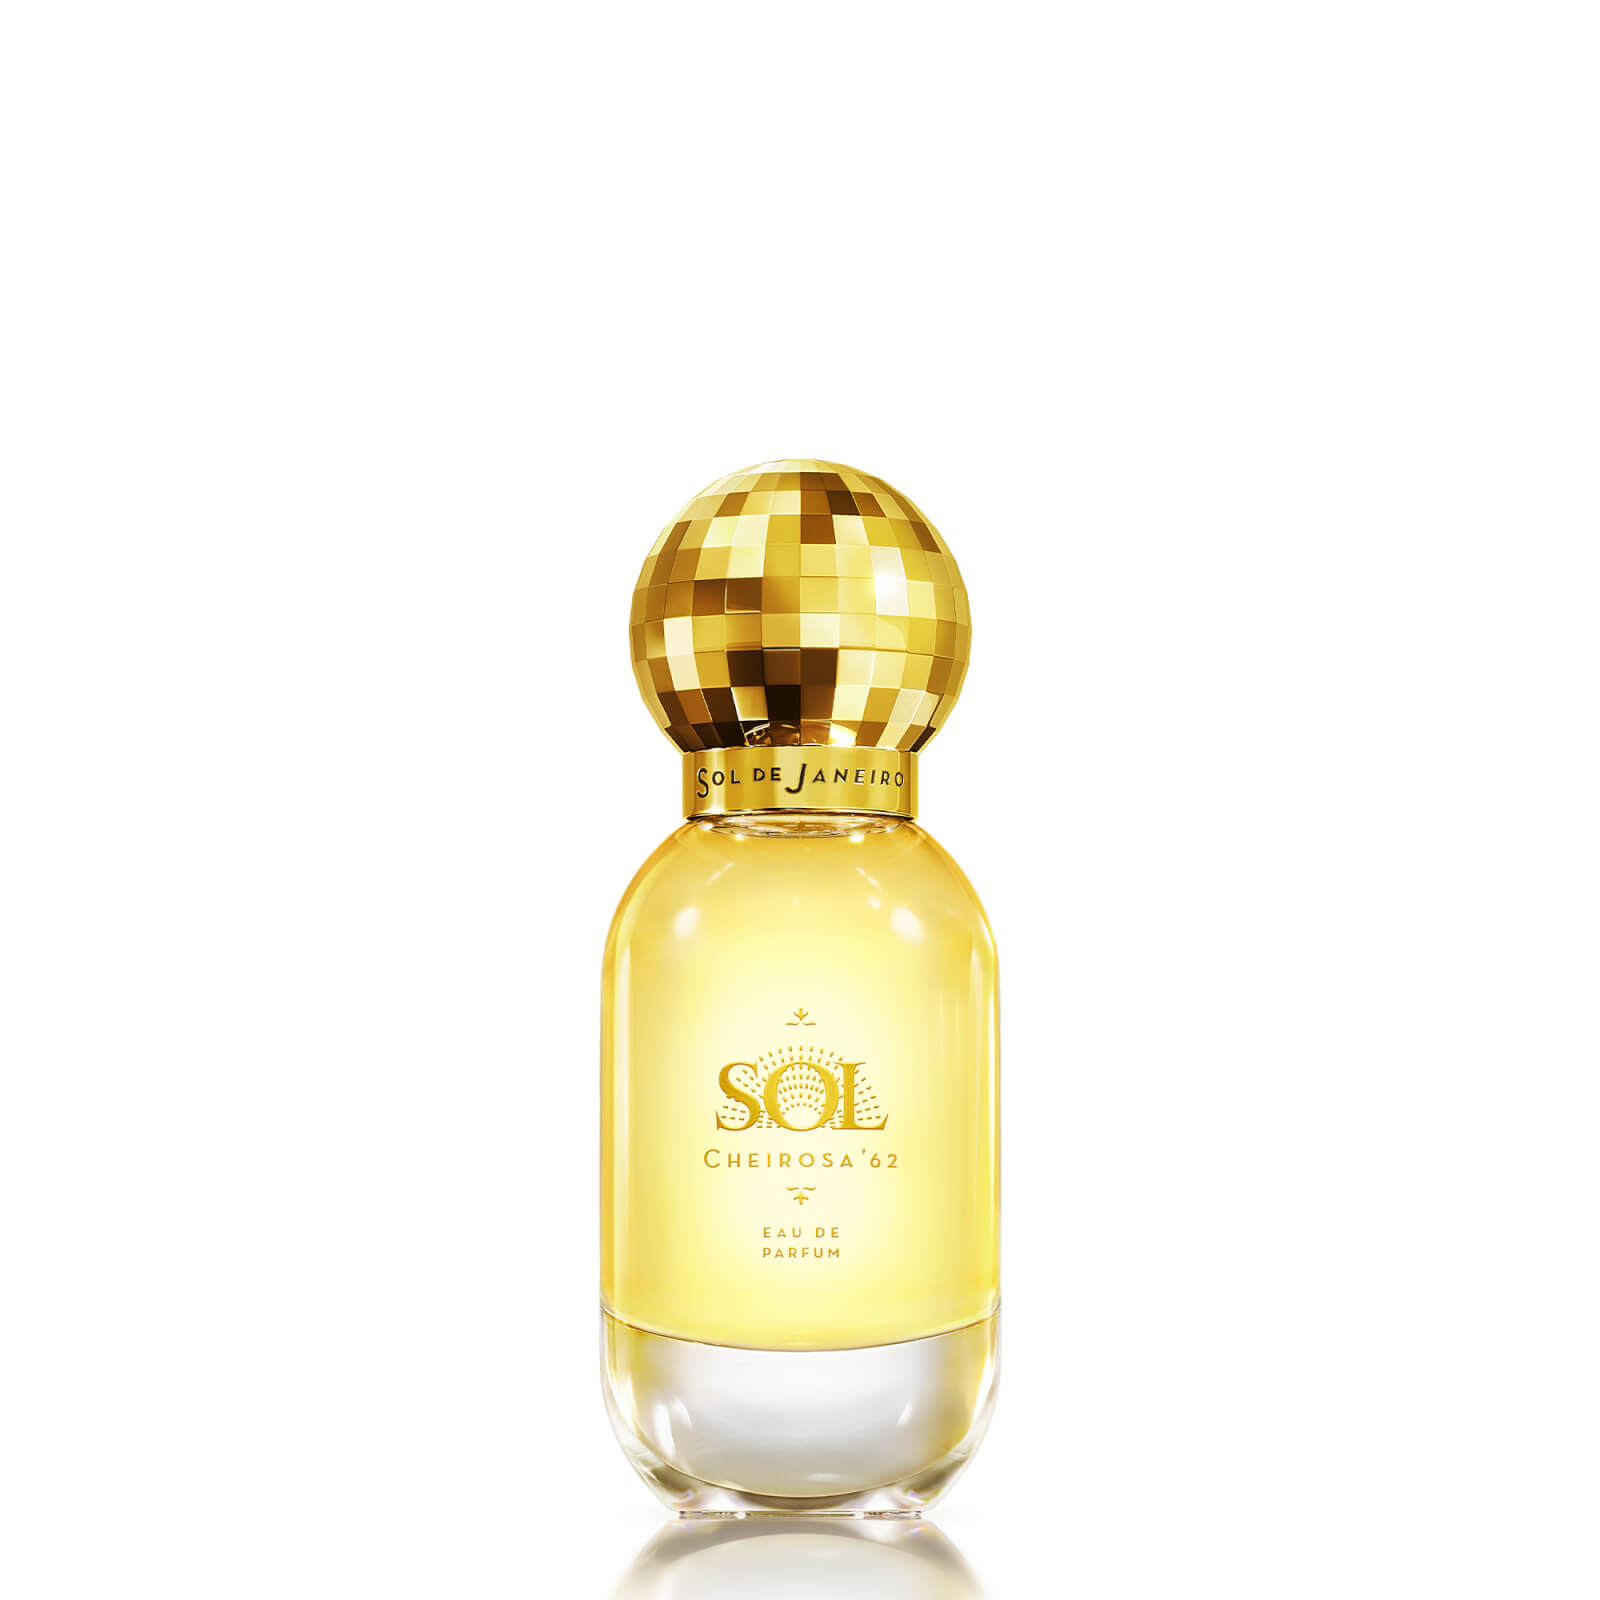 Image of Sol de Janeiro Cheirosa '62 Eau de Parfum Profumo (Various Sizes) - 50ml